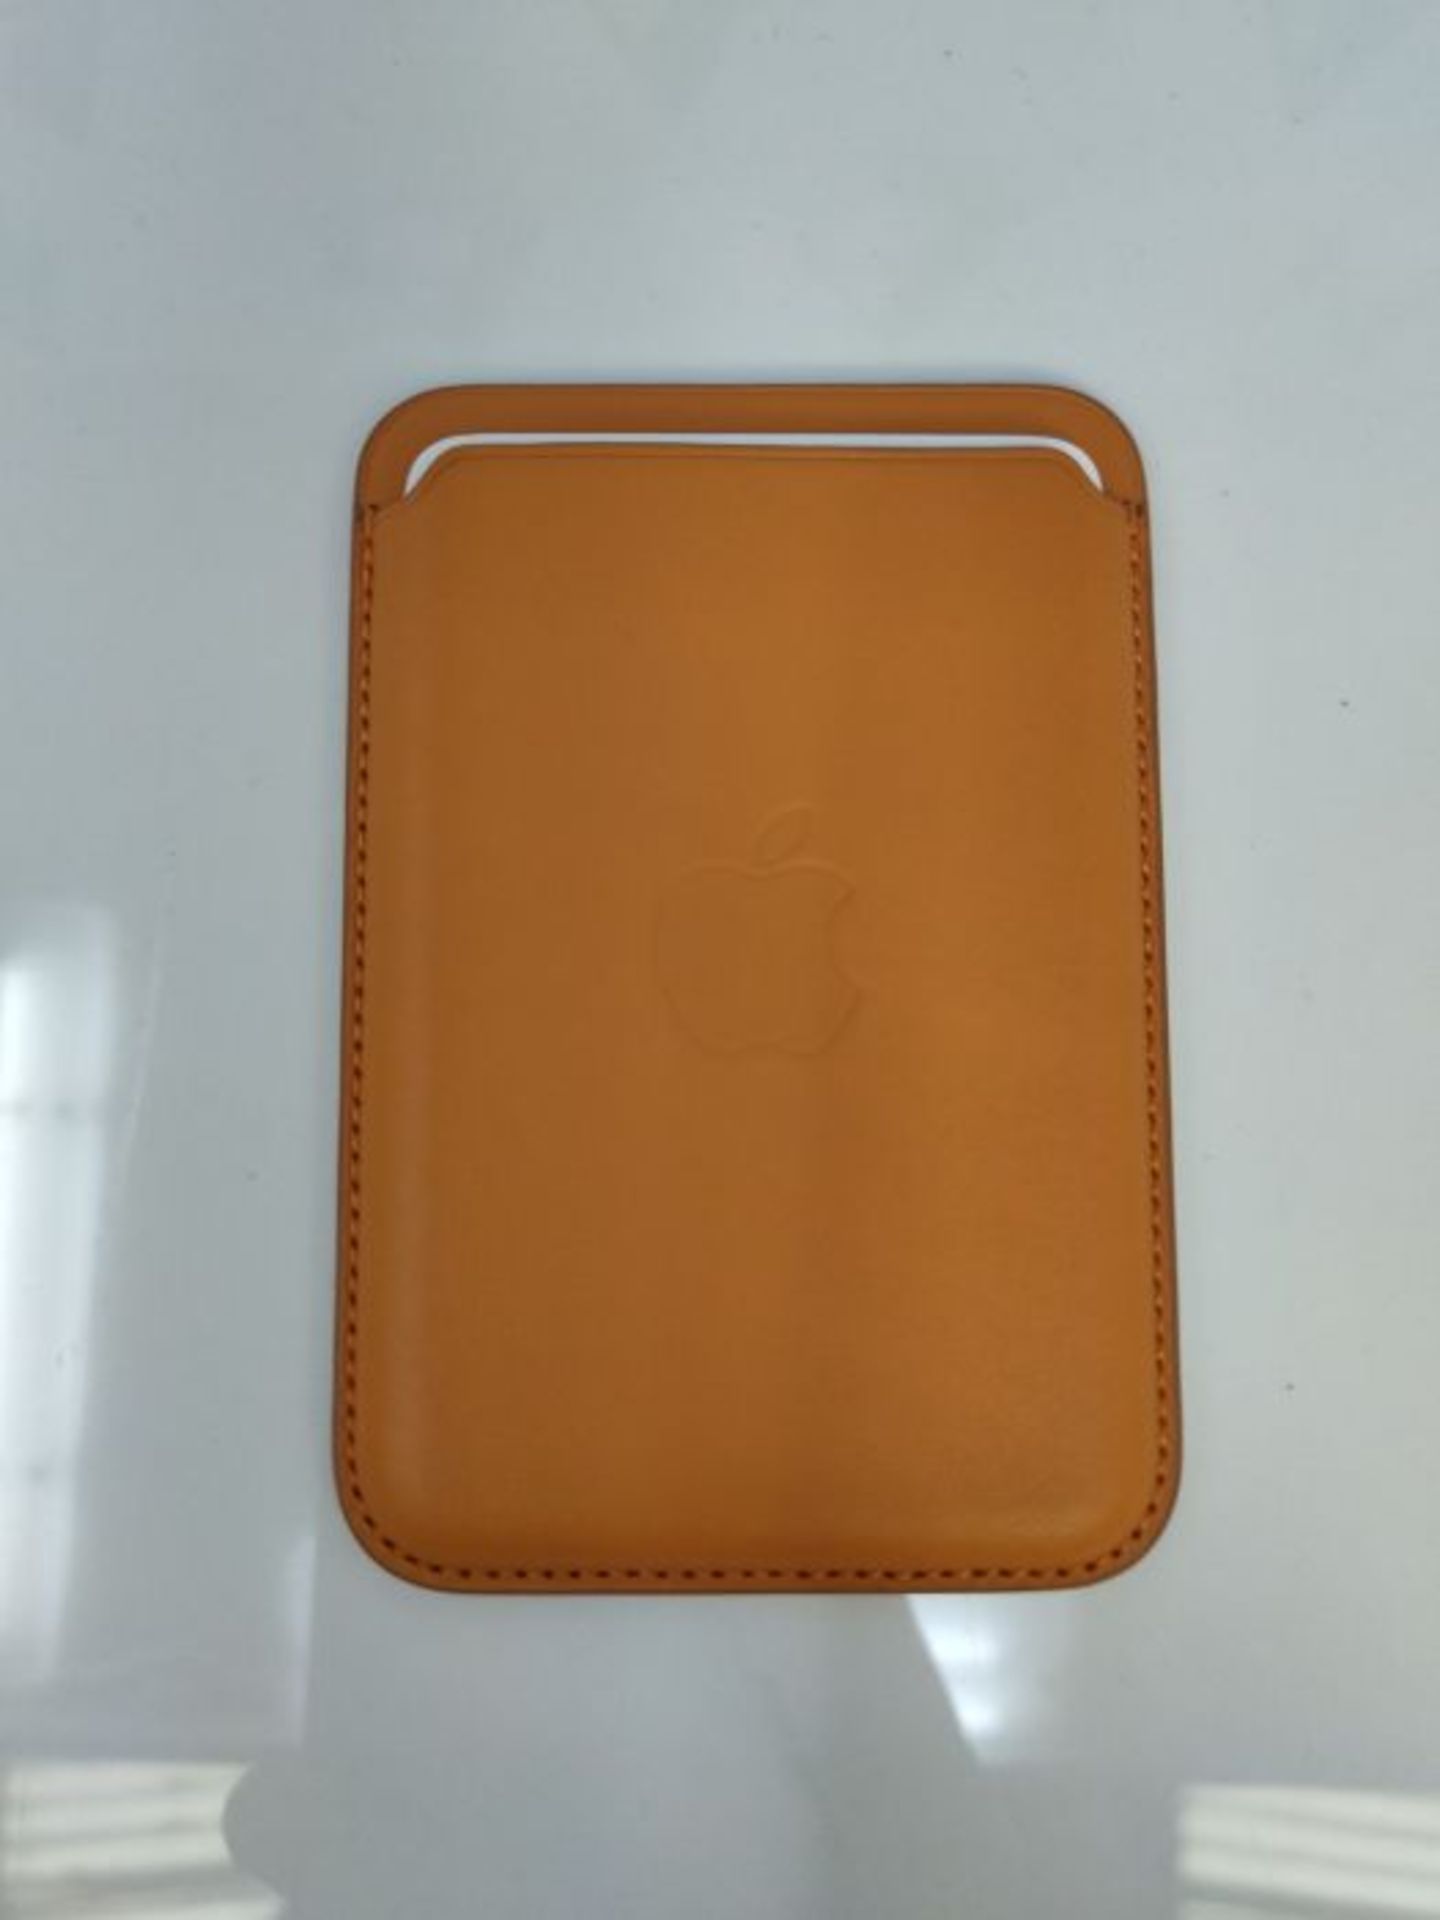 Apple Leder Wallet mit MagSafe (fÃ¼r iPhone) - Goldbraun - Image 3 of 3